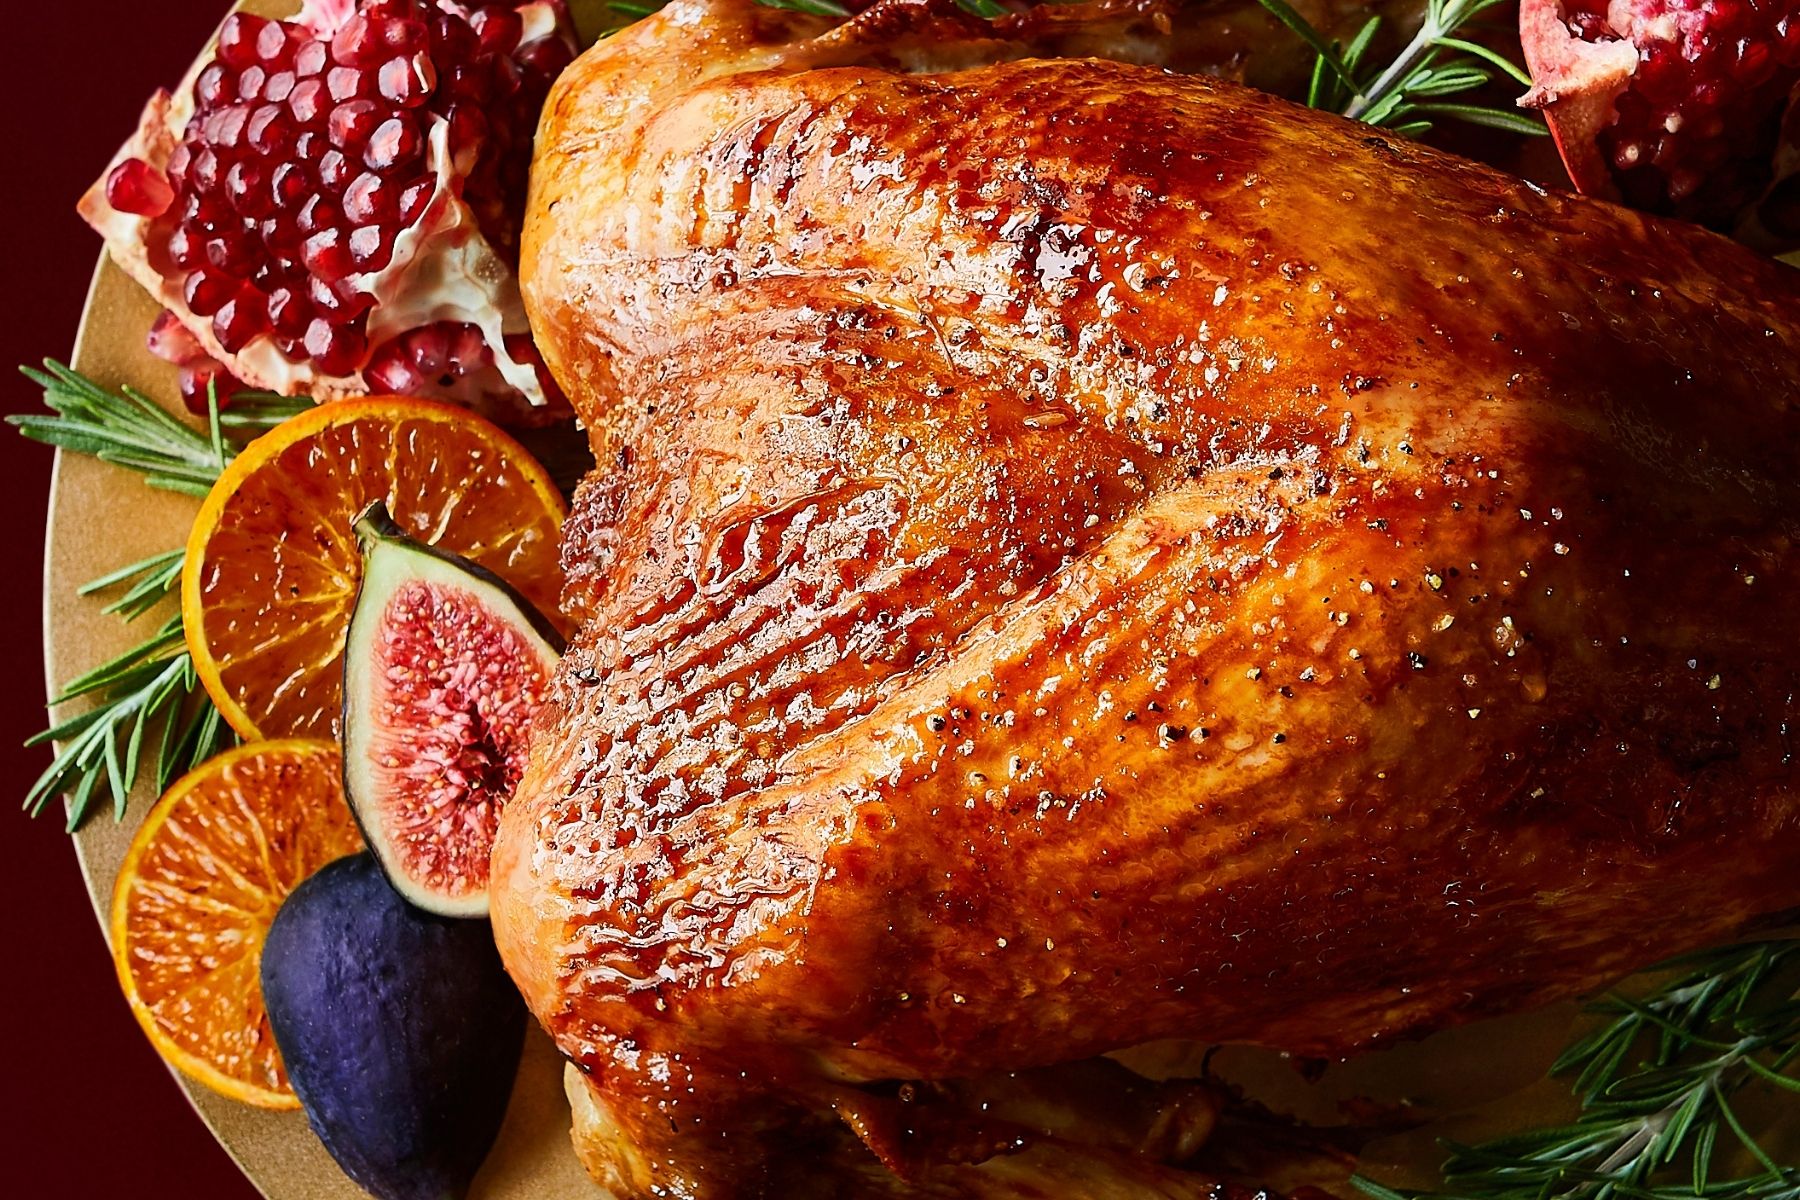 Christmas turkey order deadlines for Tesco, Asda, Aldi and more